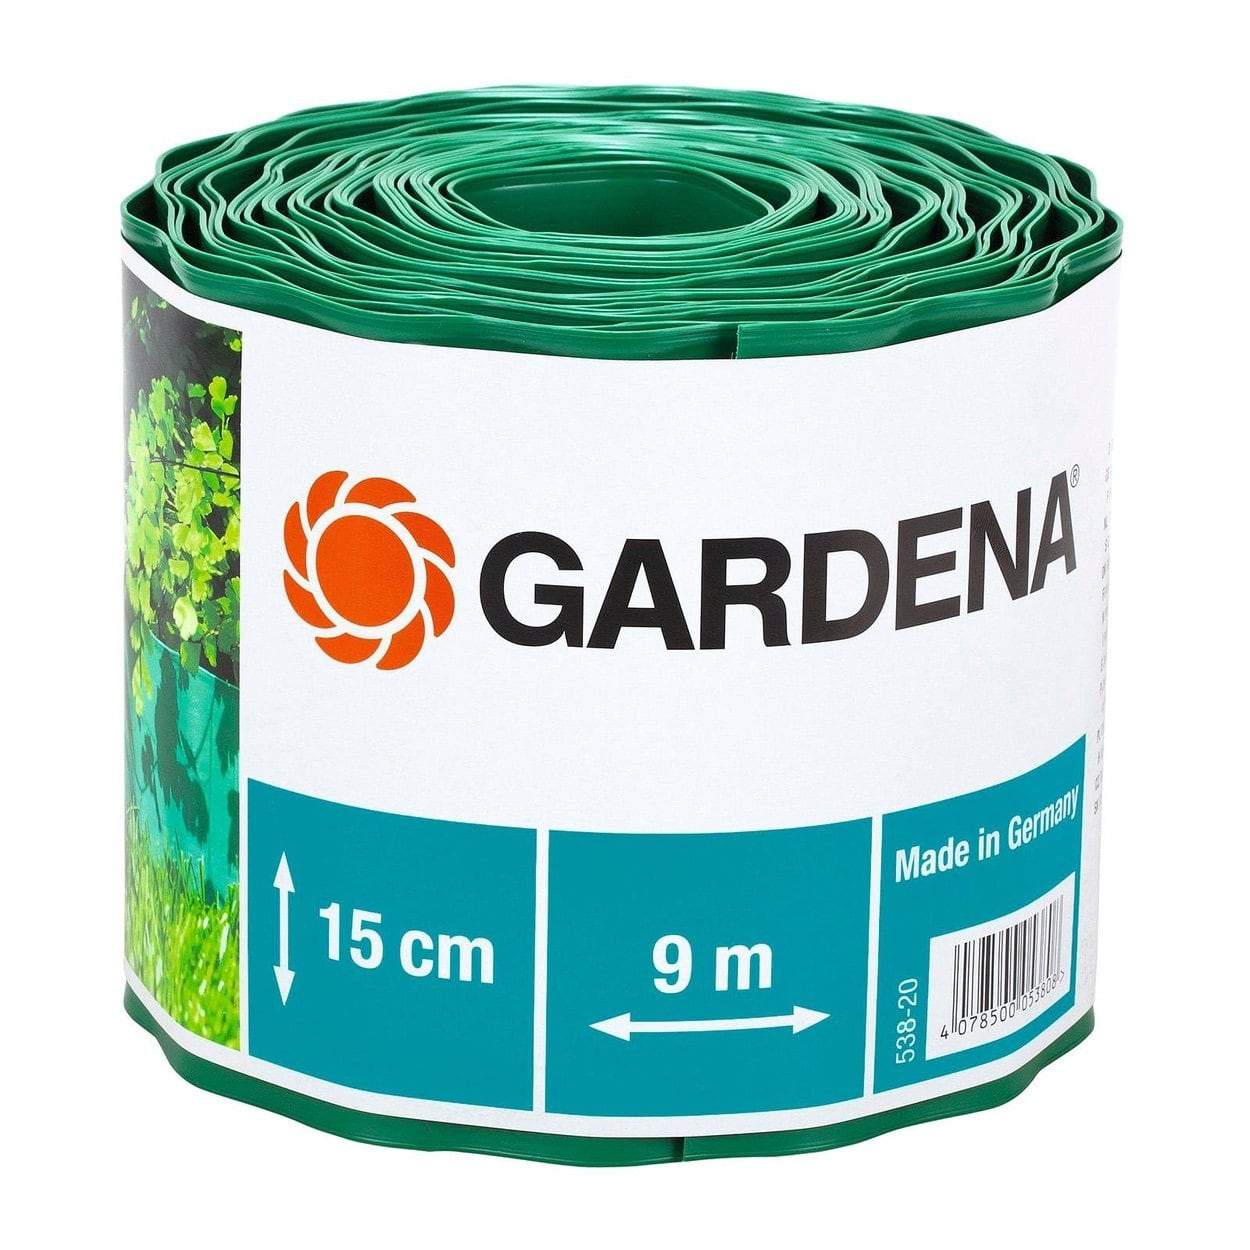 Photo of Gardena G-538 Lawn Edging 15Cm High